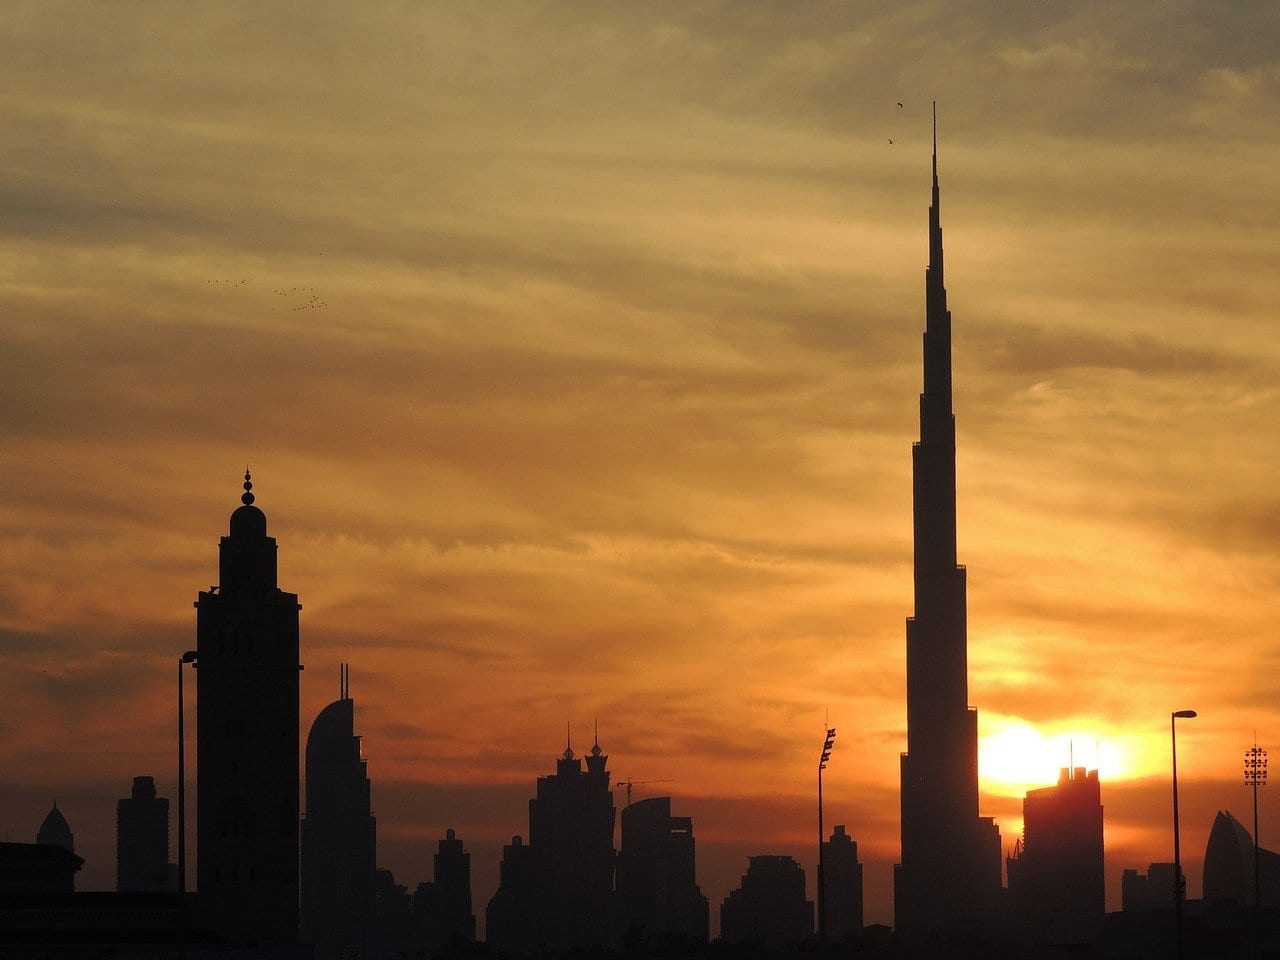 facts about the Burj Khalifa